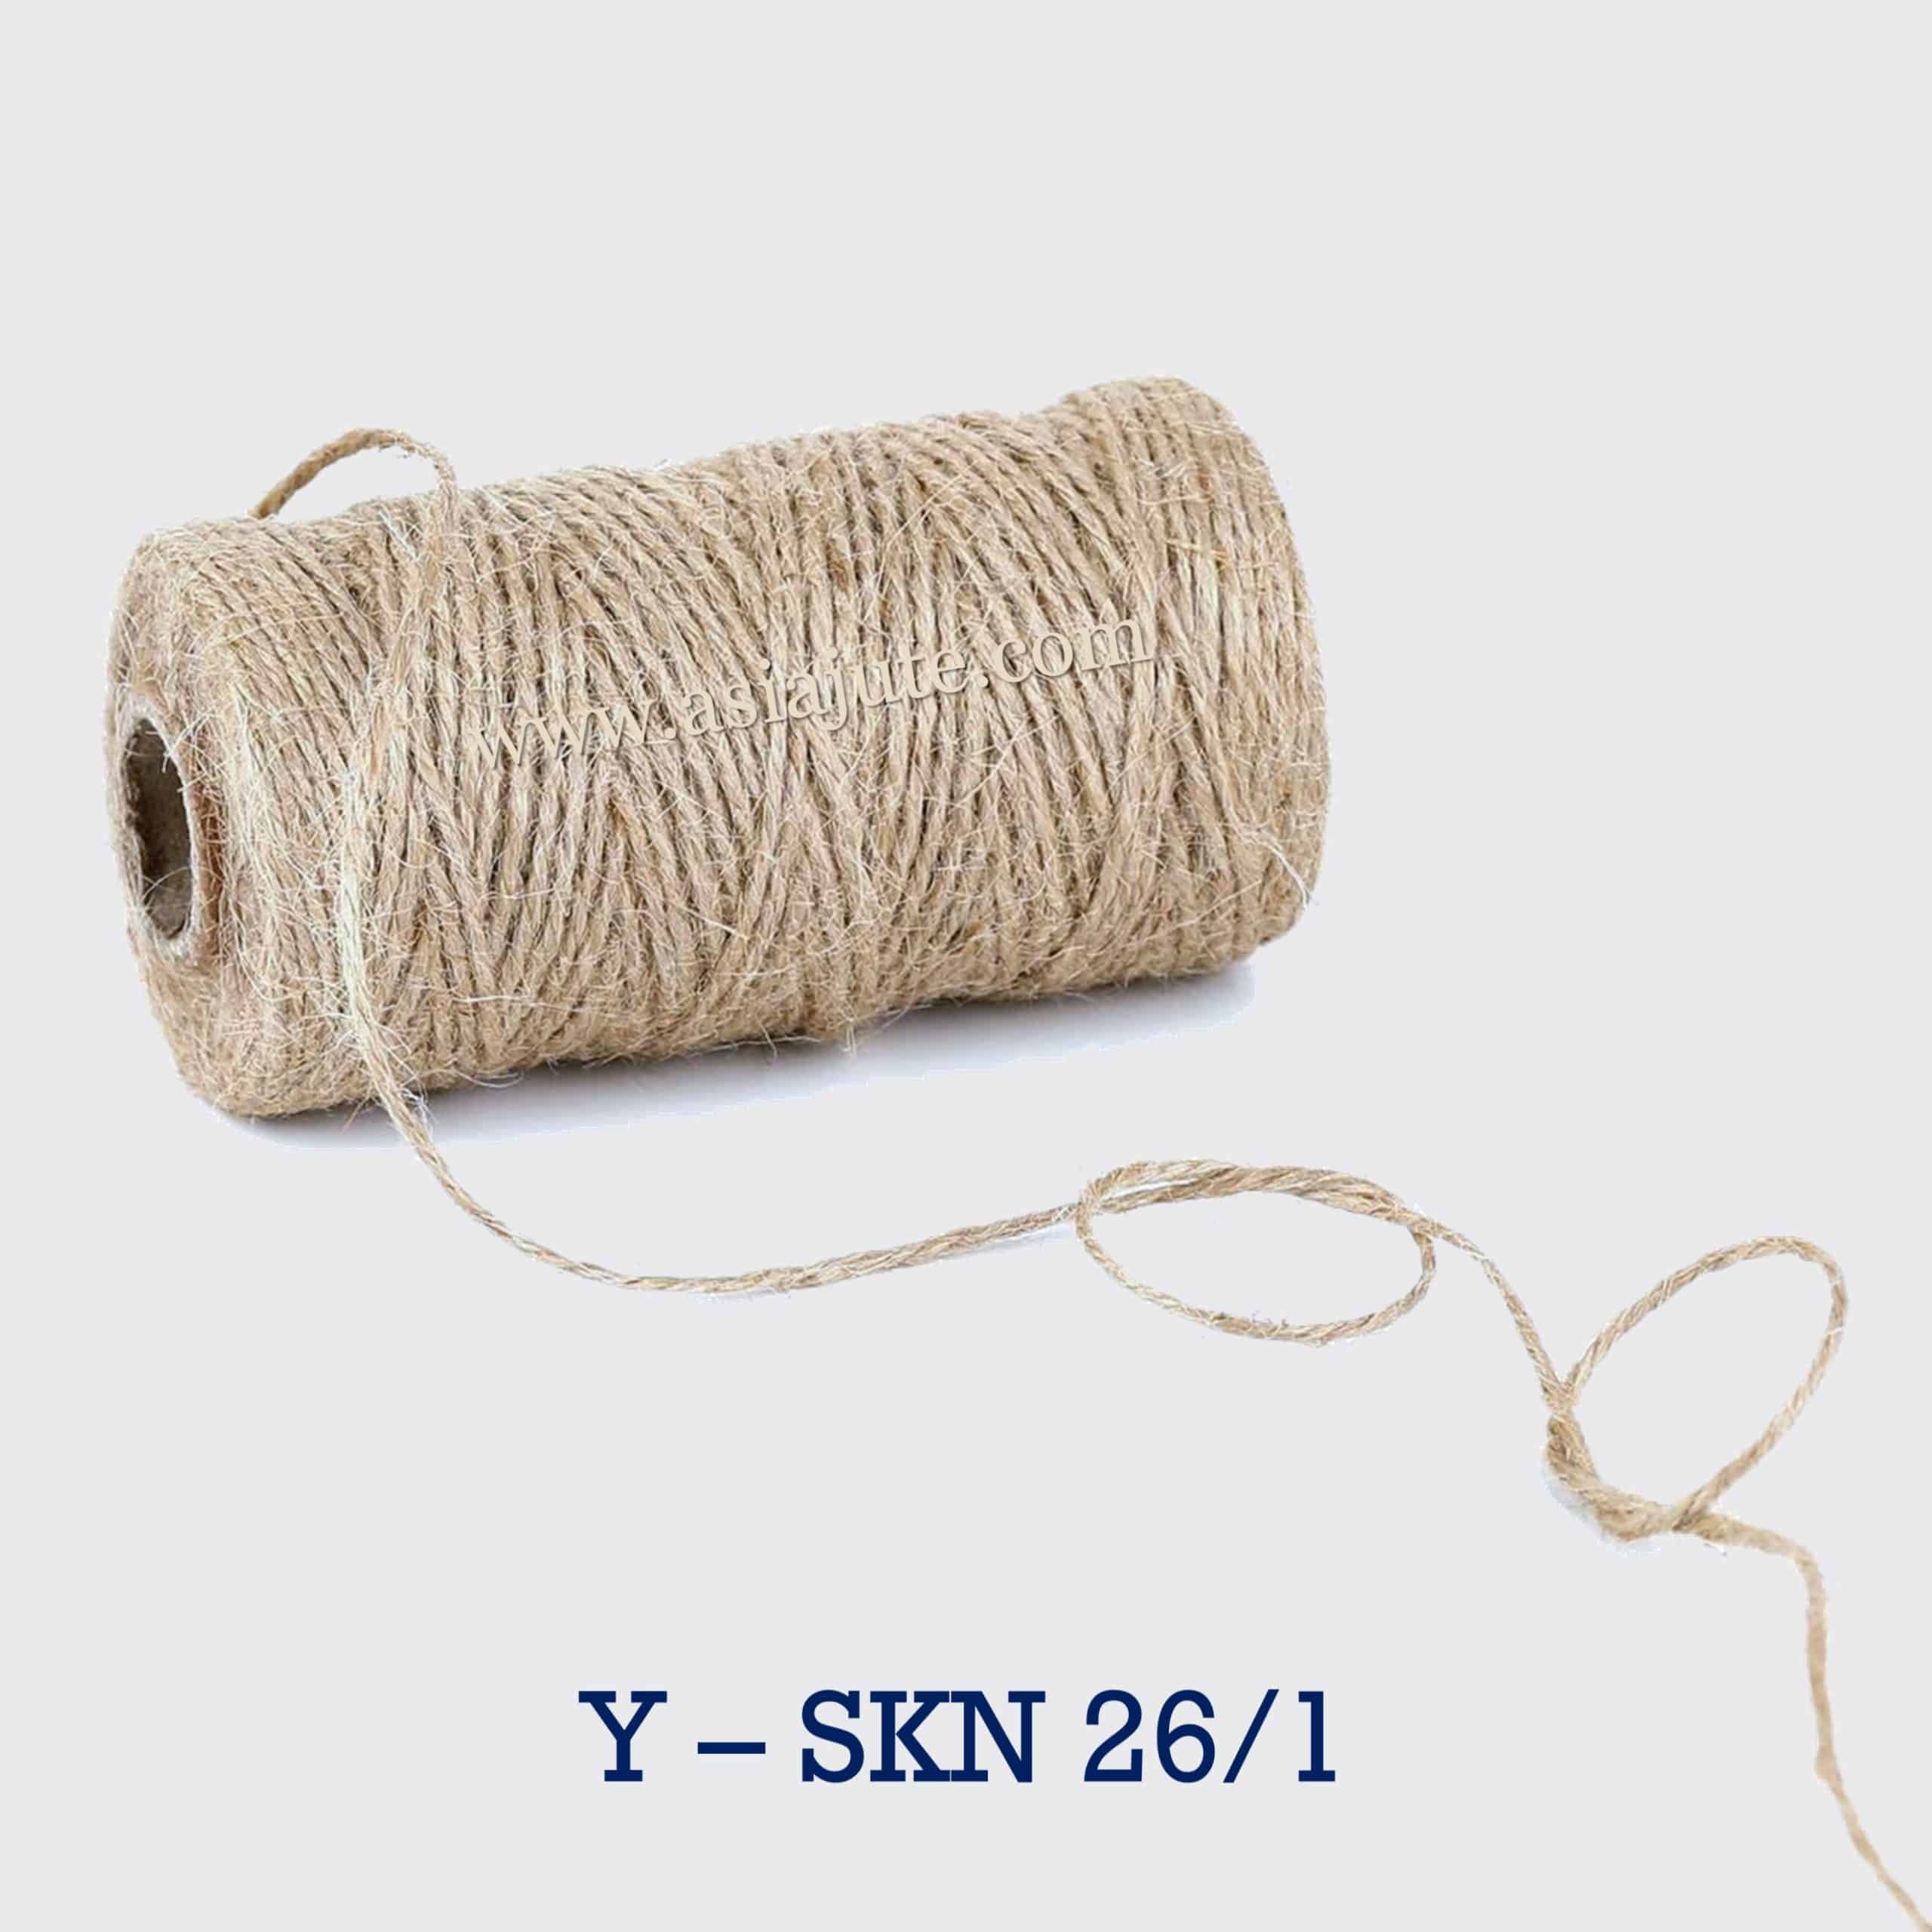 Sri  A Ball of Decorative Rope: Cotton Covered Bast Fiber Twine